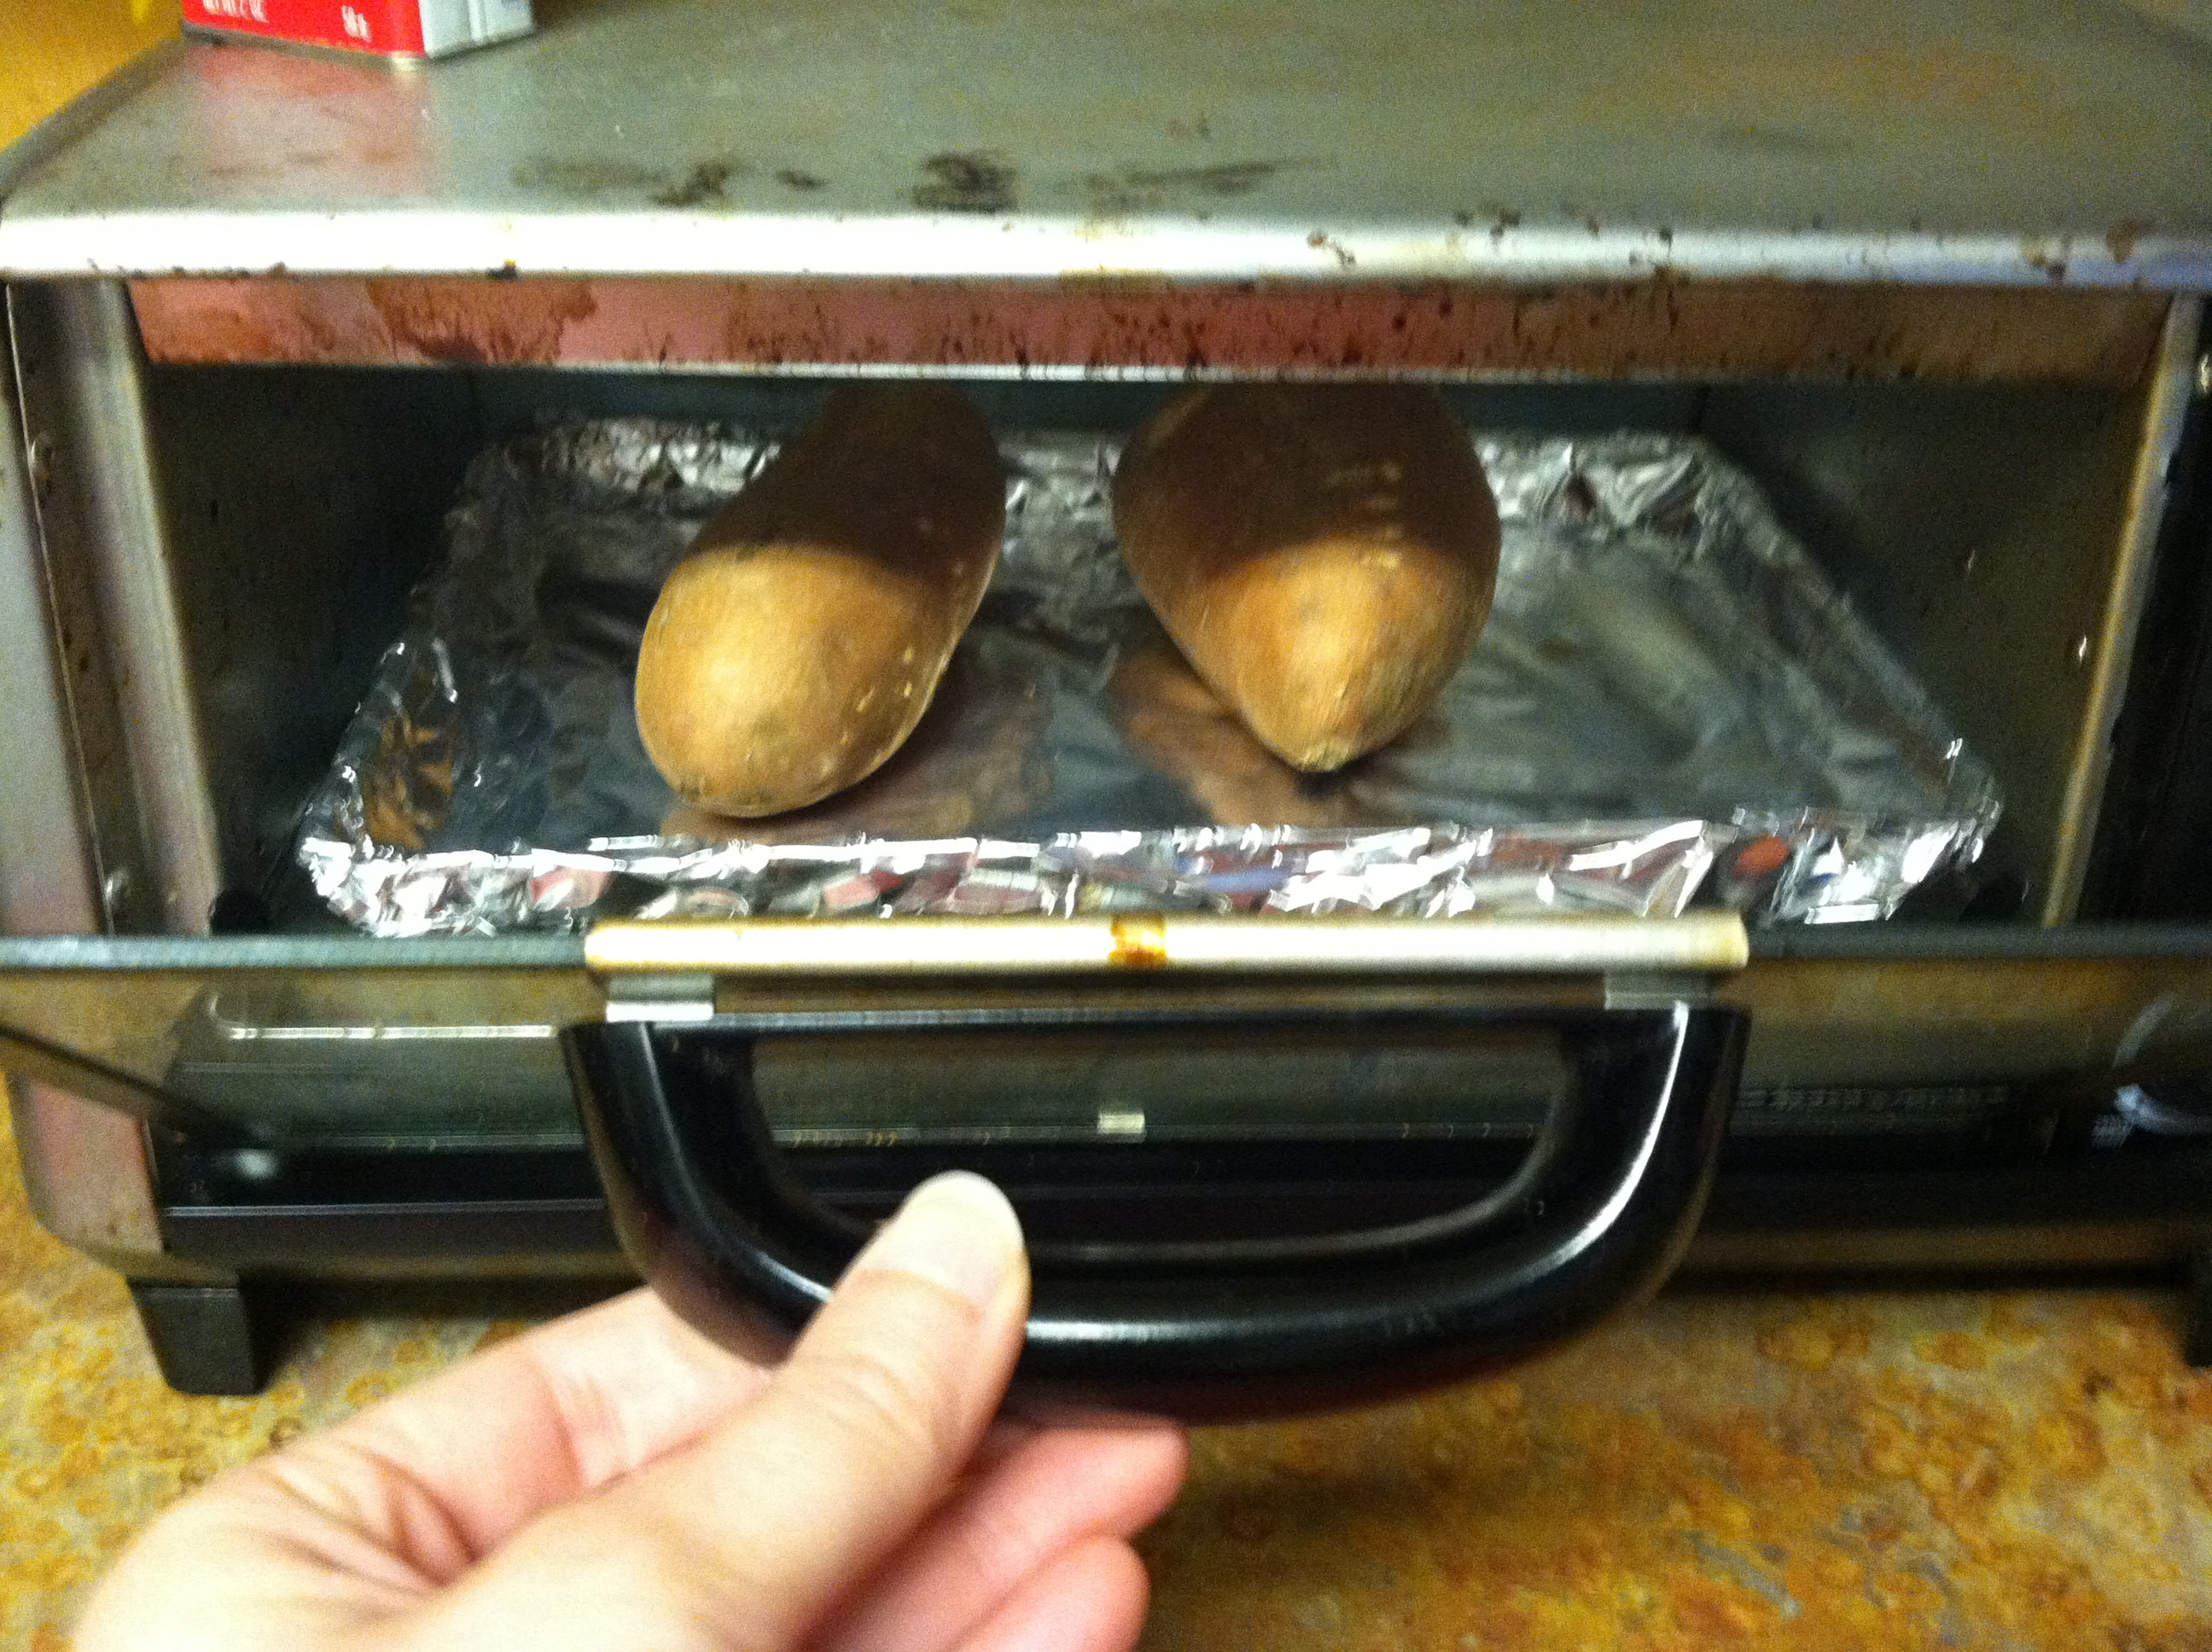 Baked Potato In Toaster Oven
 sweet potatoes